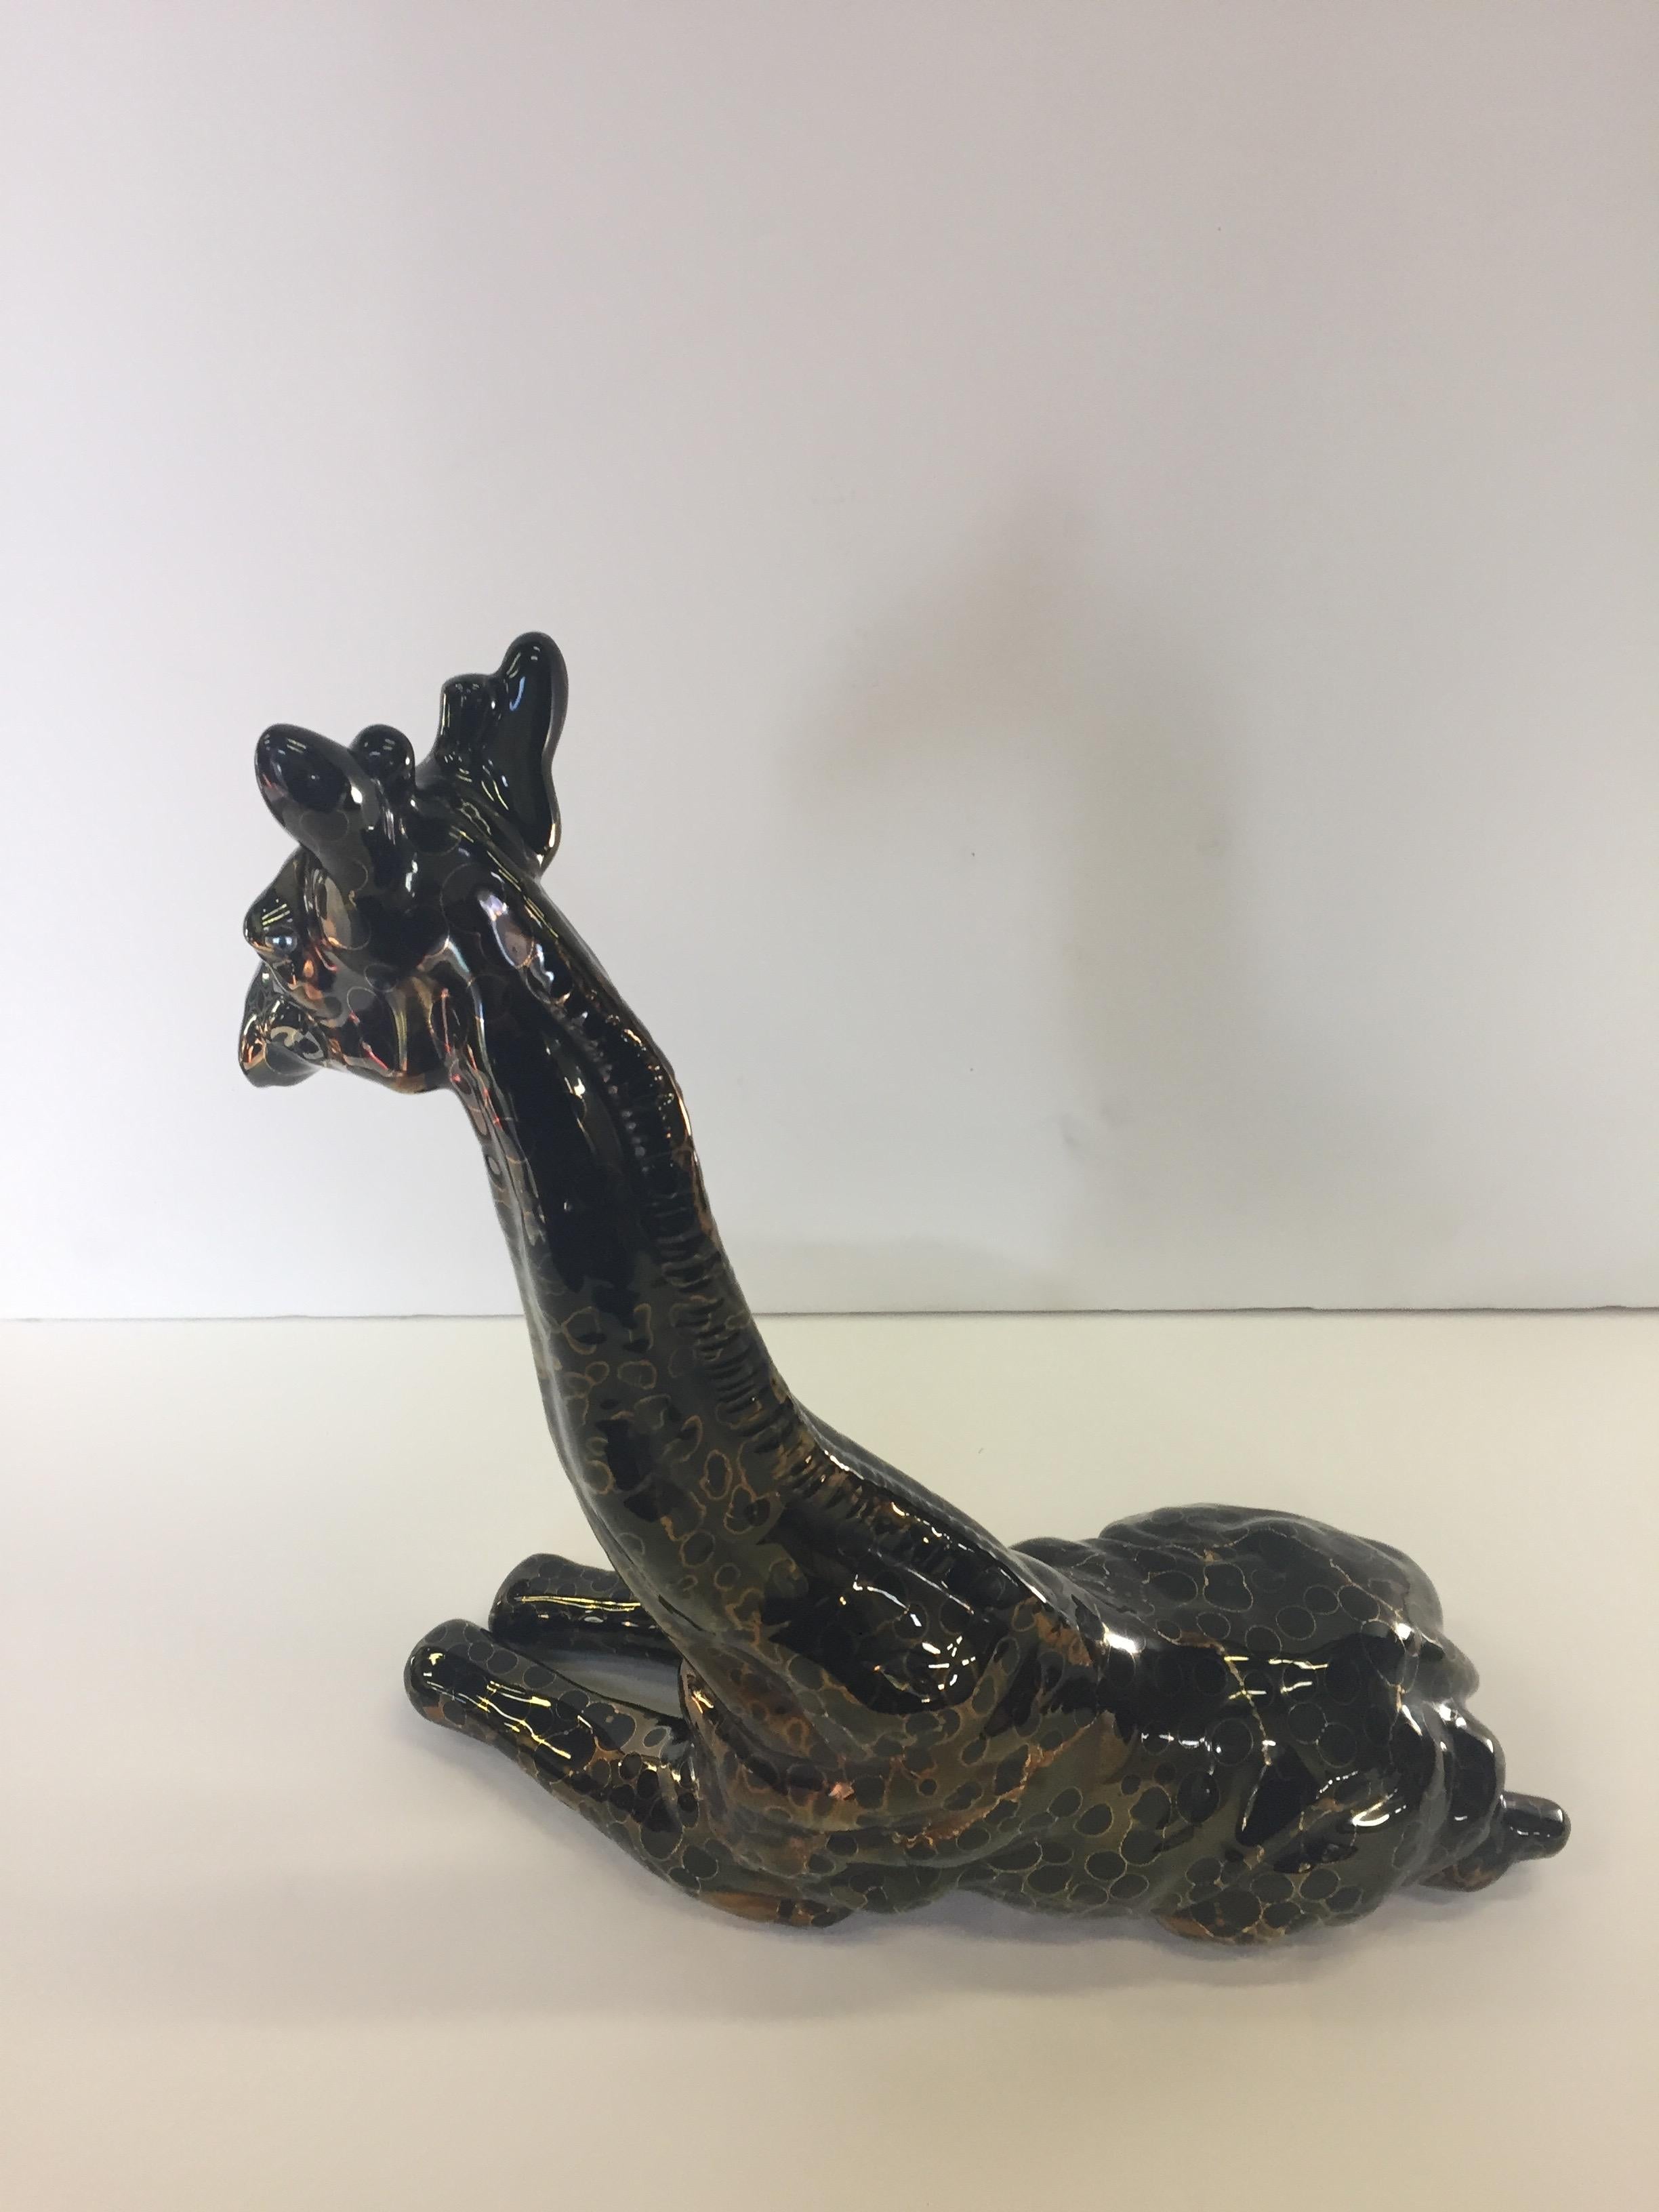 Charming Pair of Ceramic Metallic Giraffe Sculptures 3